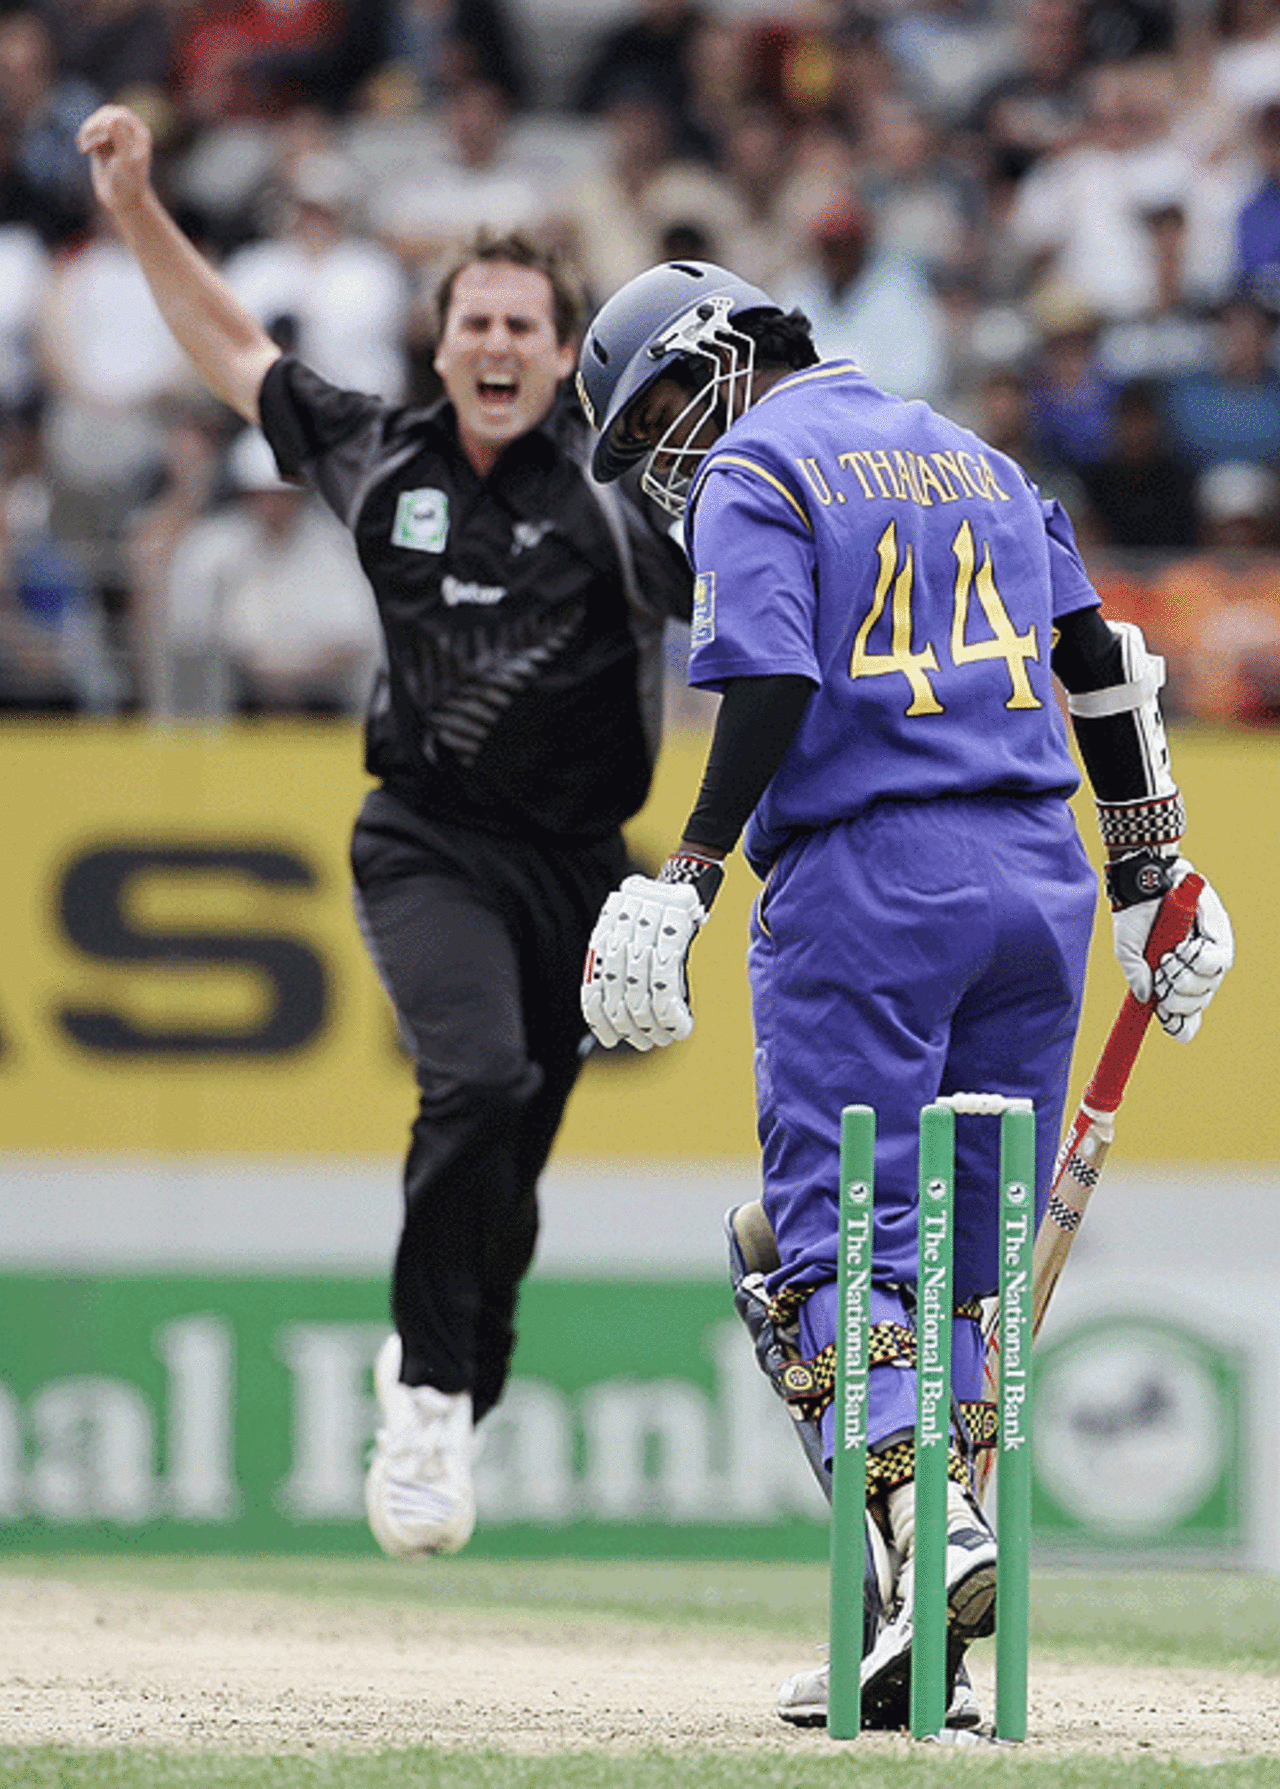 Mark Gillespie celebrates after bowling Upul Tharanga for 22, New Zealand v Sri Lanka, 4th ODI, Eden Park, January 6, 2007